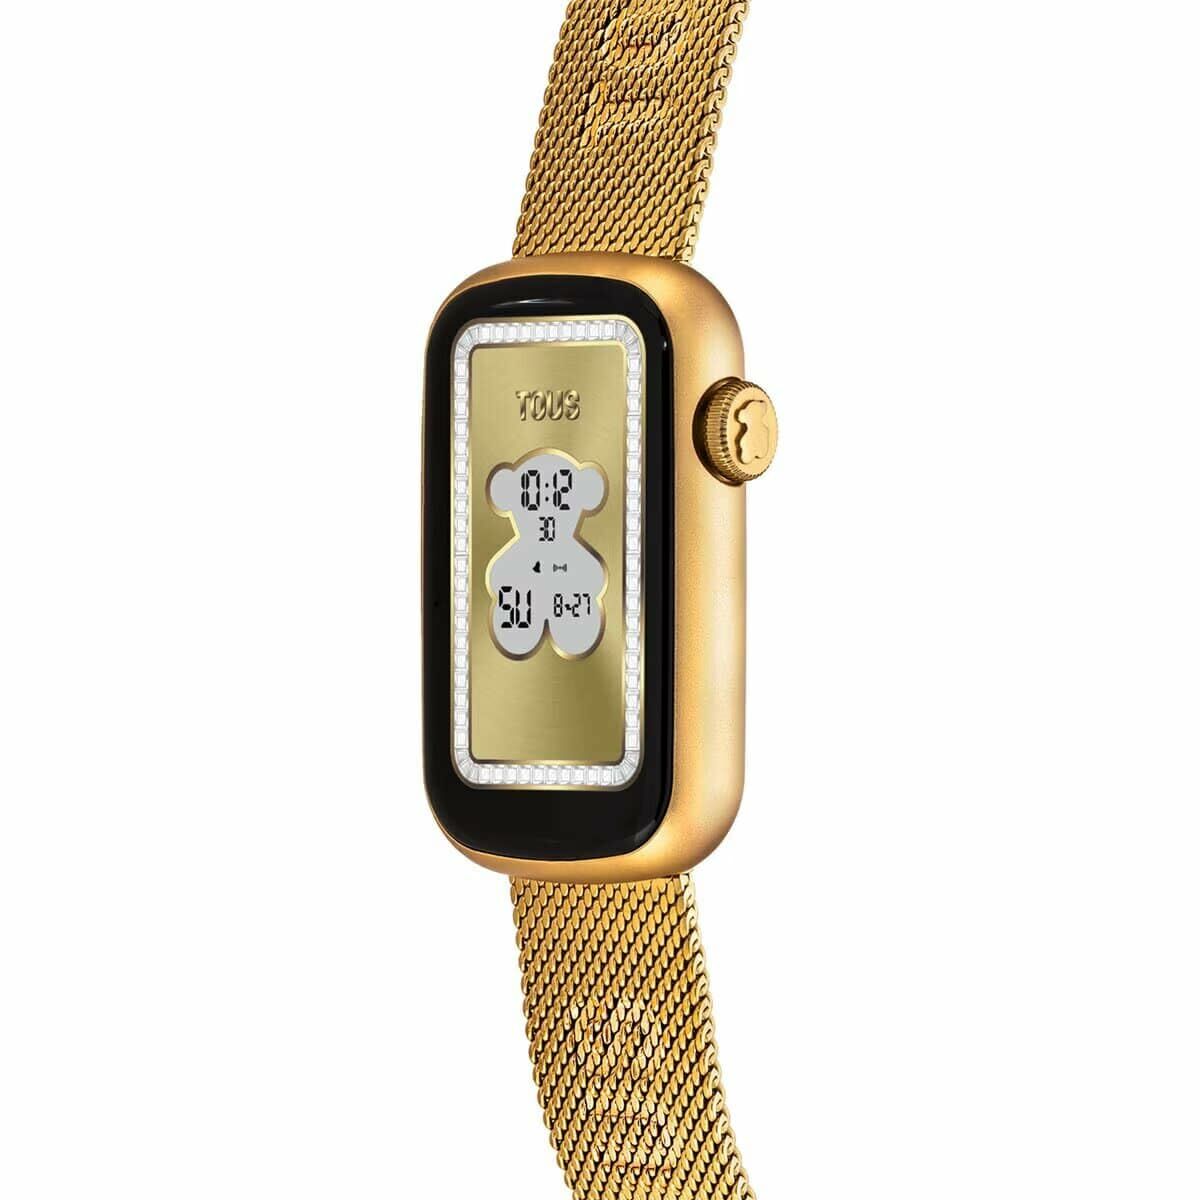 Kaufe Smartwatch Tous 3000132200 bei AWK Flagship um € 218.00